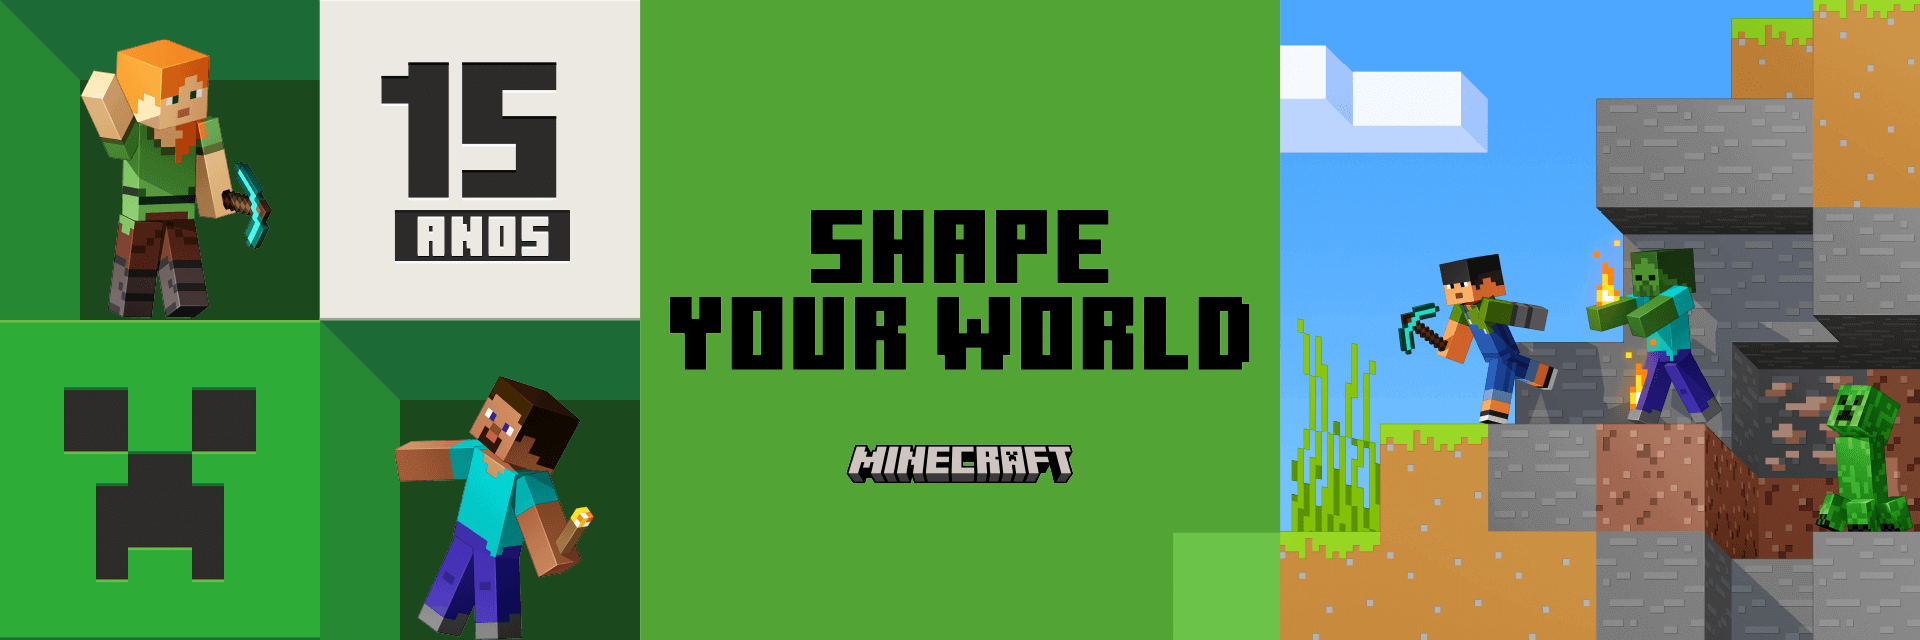 Xbox_Minecraft_15th_Anniversary